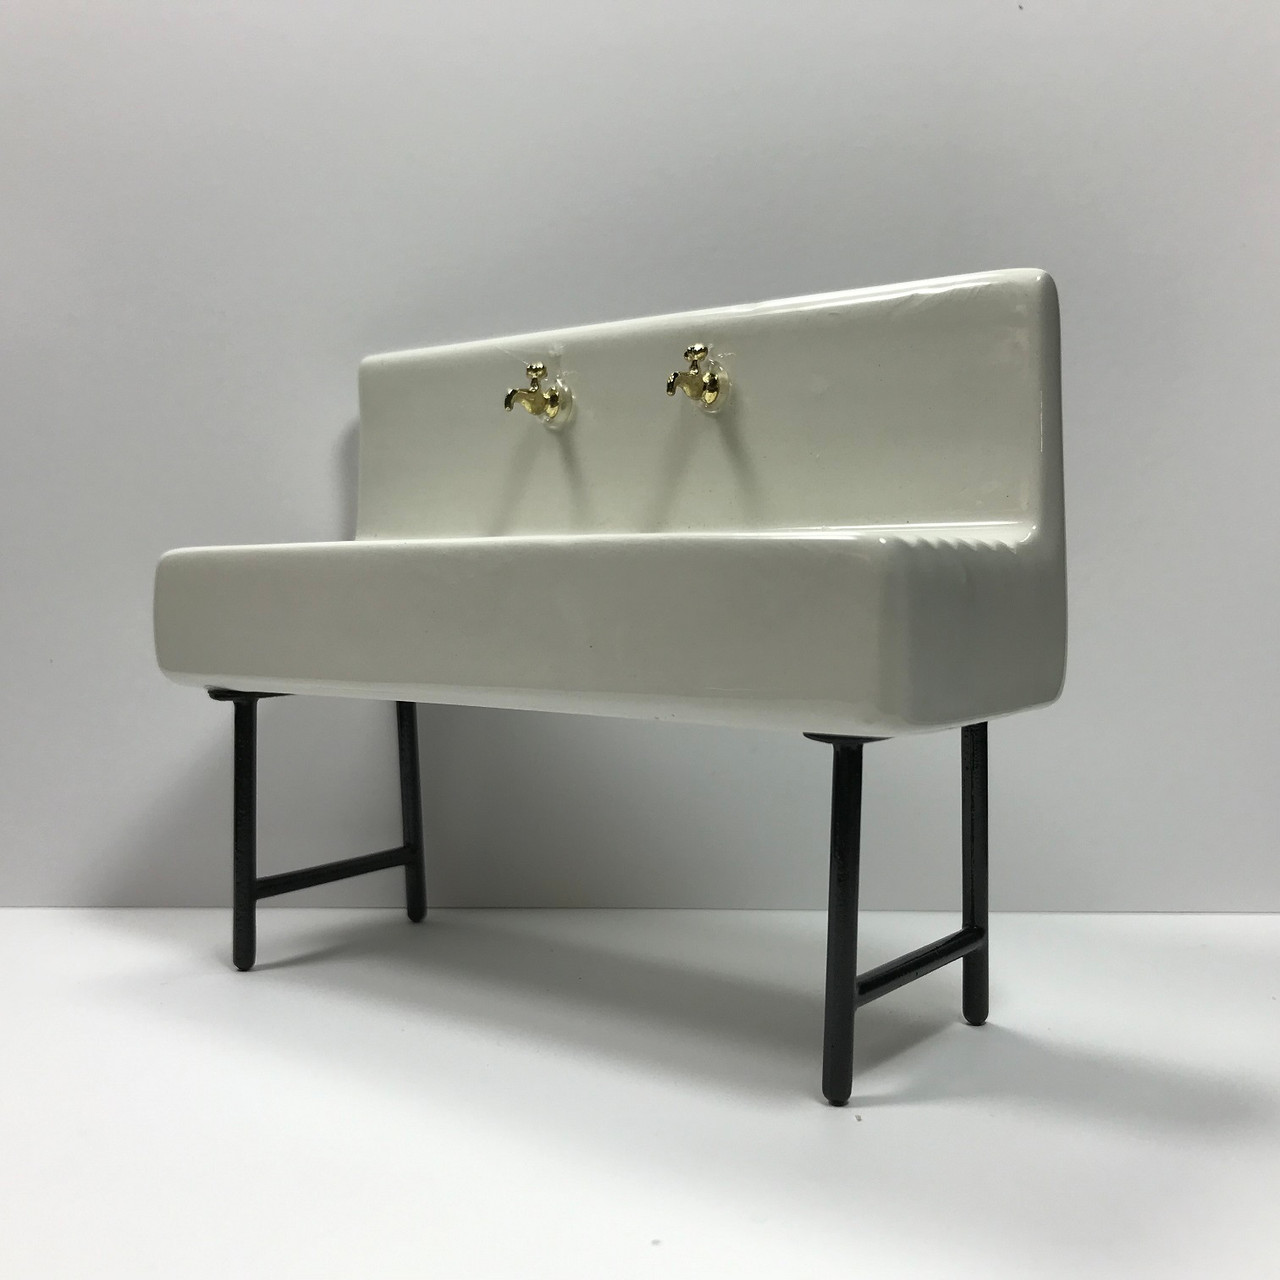 1:12 Scale Dollhouse Miniature 1920's Porcelain Sink (RA0100) front/side